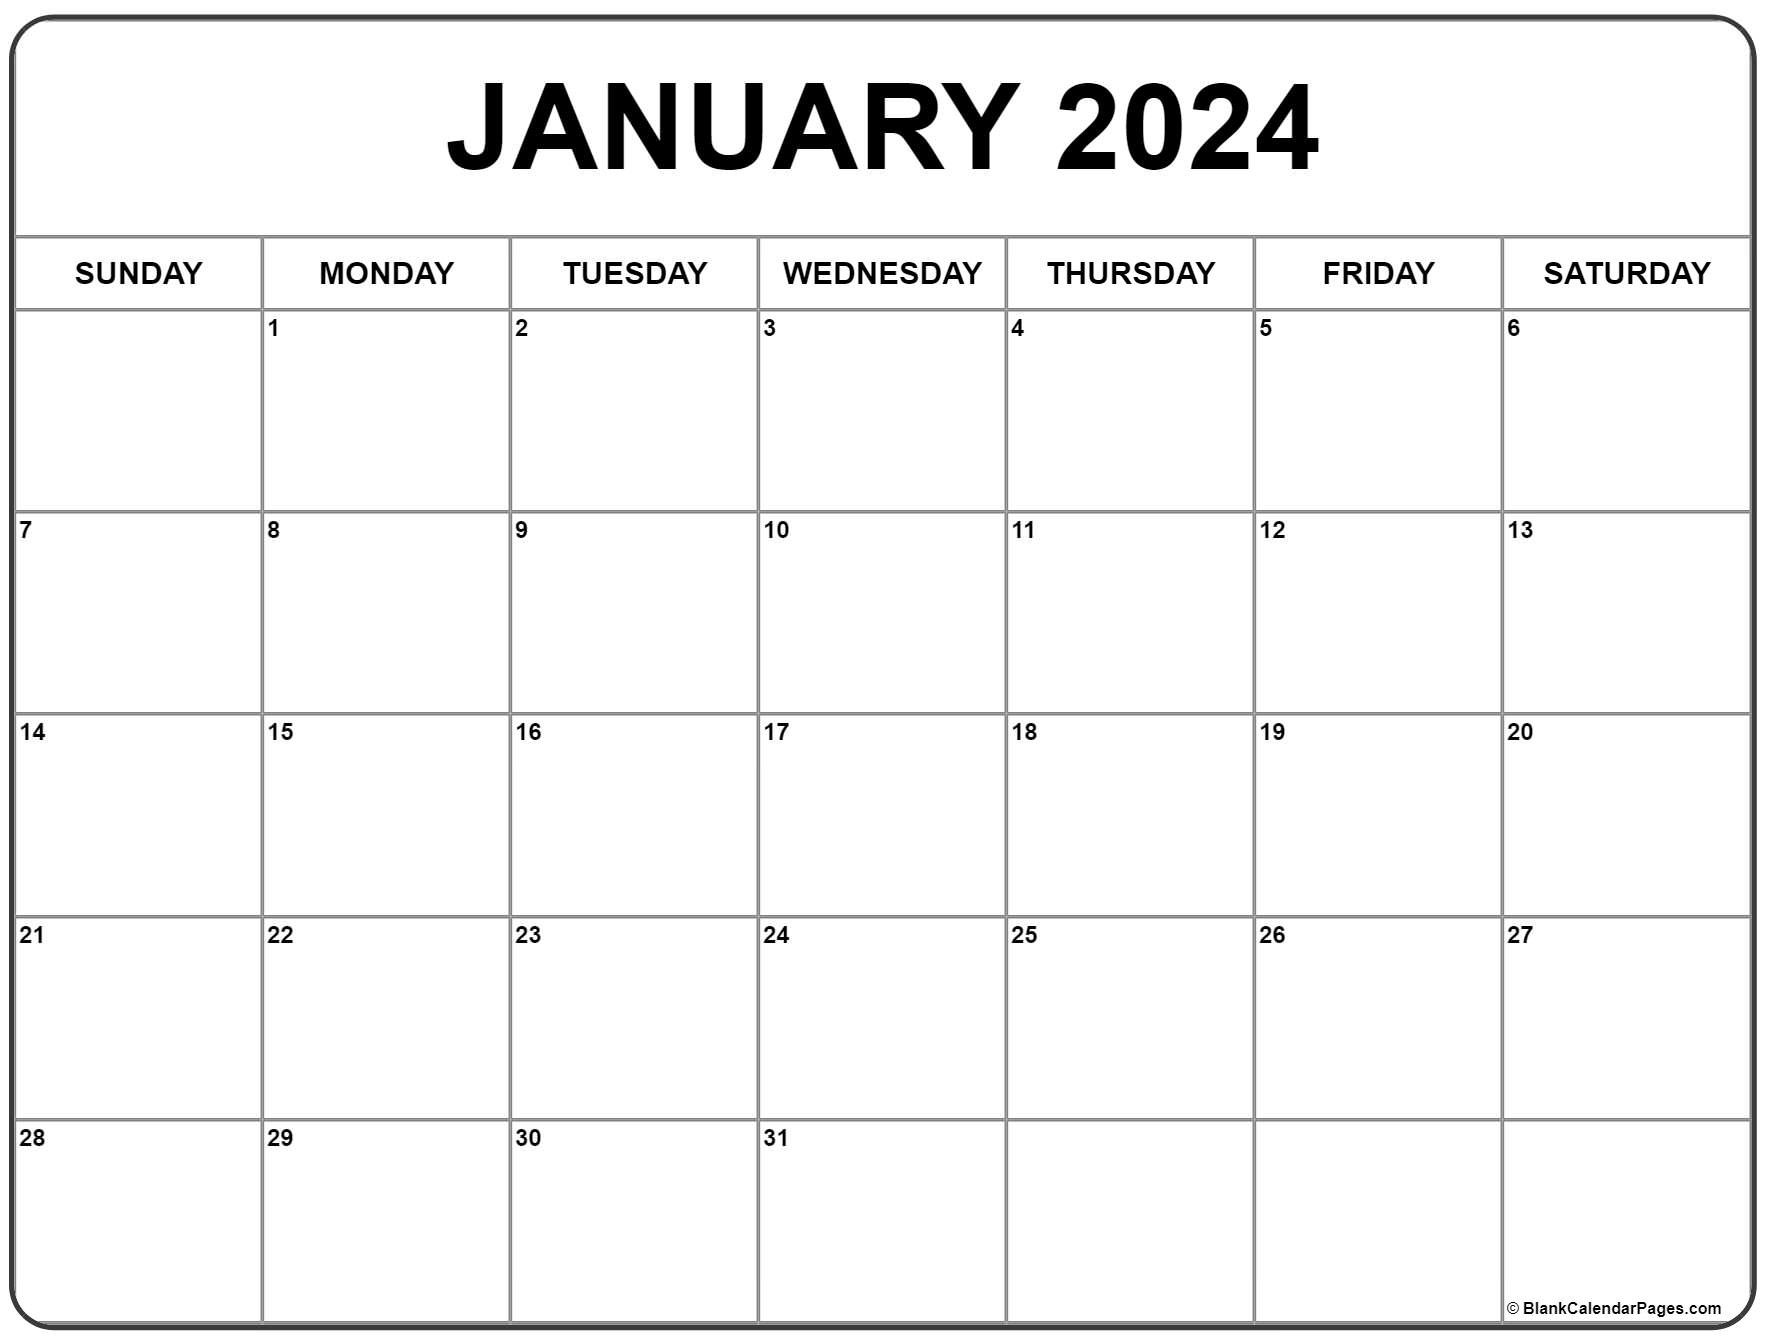 2022 Calendar Time And Date - Nexta